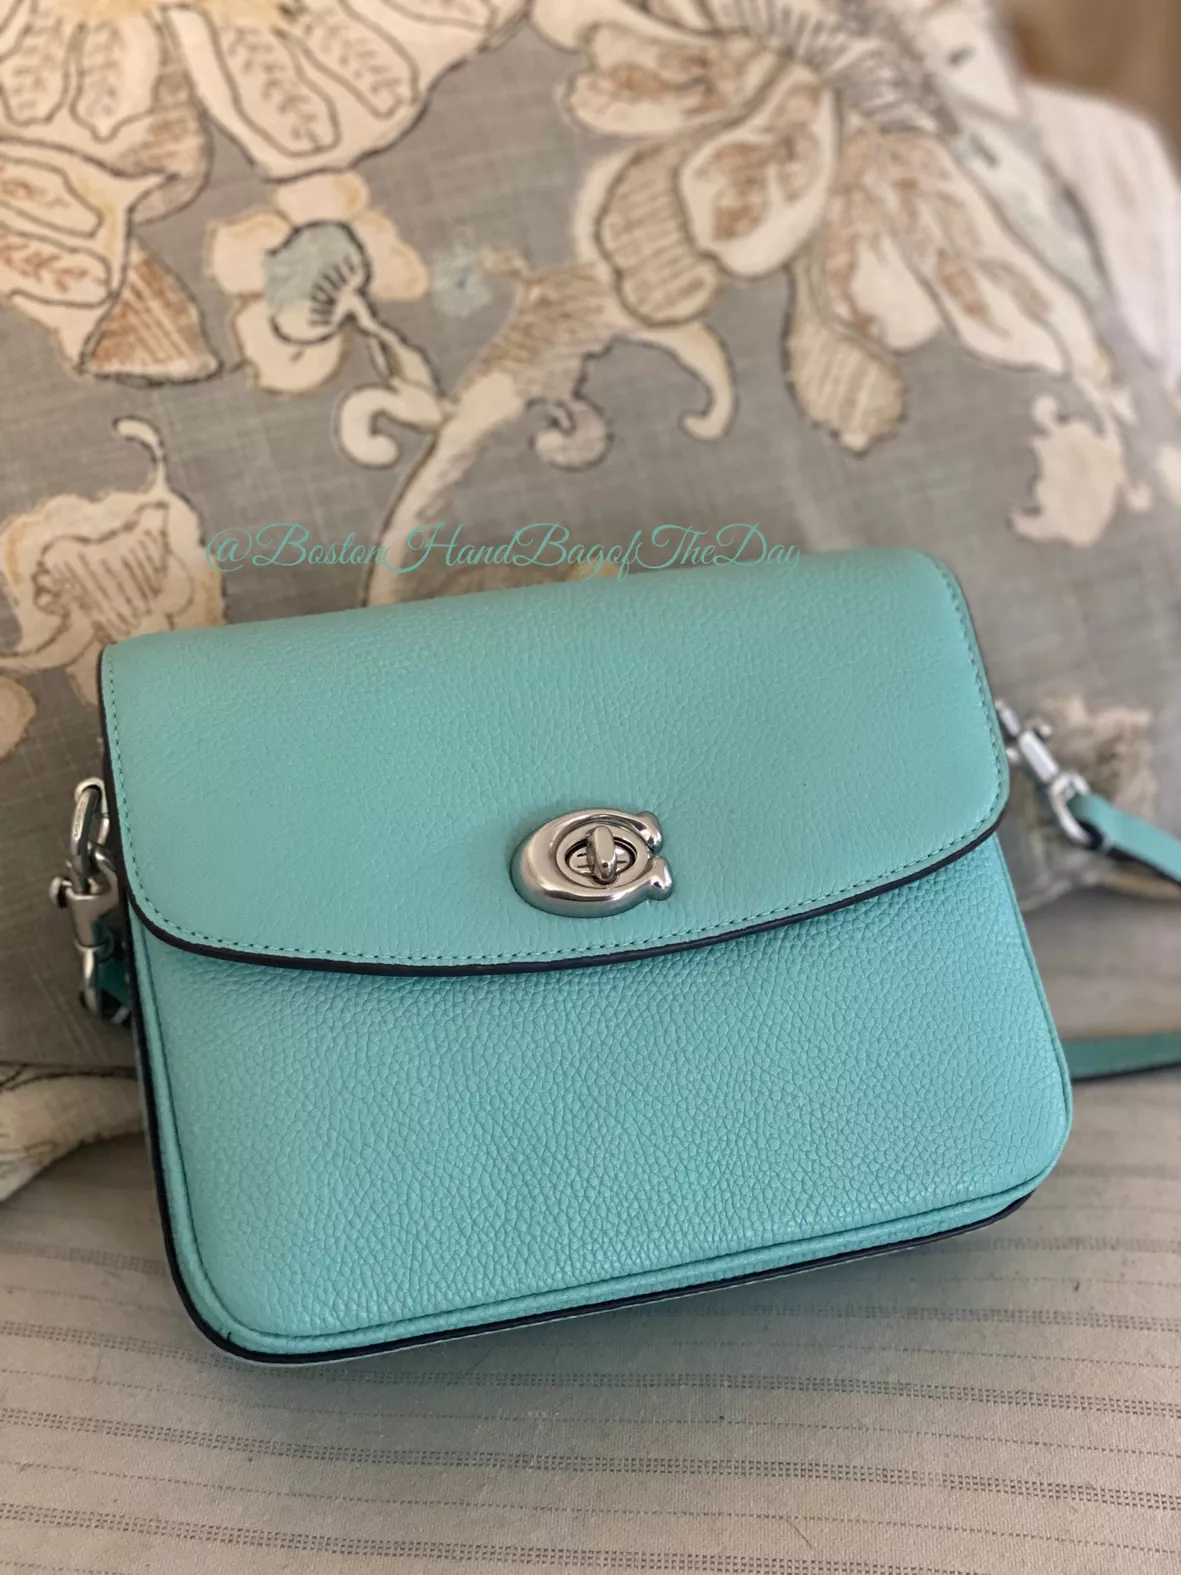 New Sarah wallet Damier Azur Studs💗 + key pouch mono; question in comments  : r/Louisvuitton